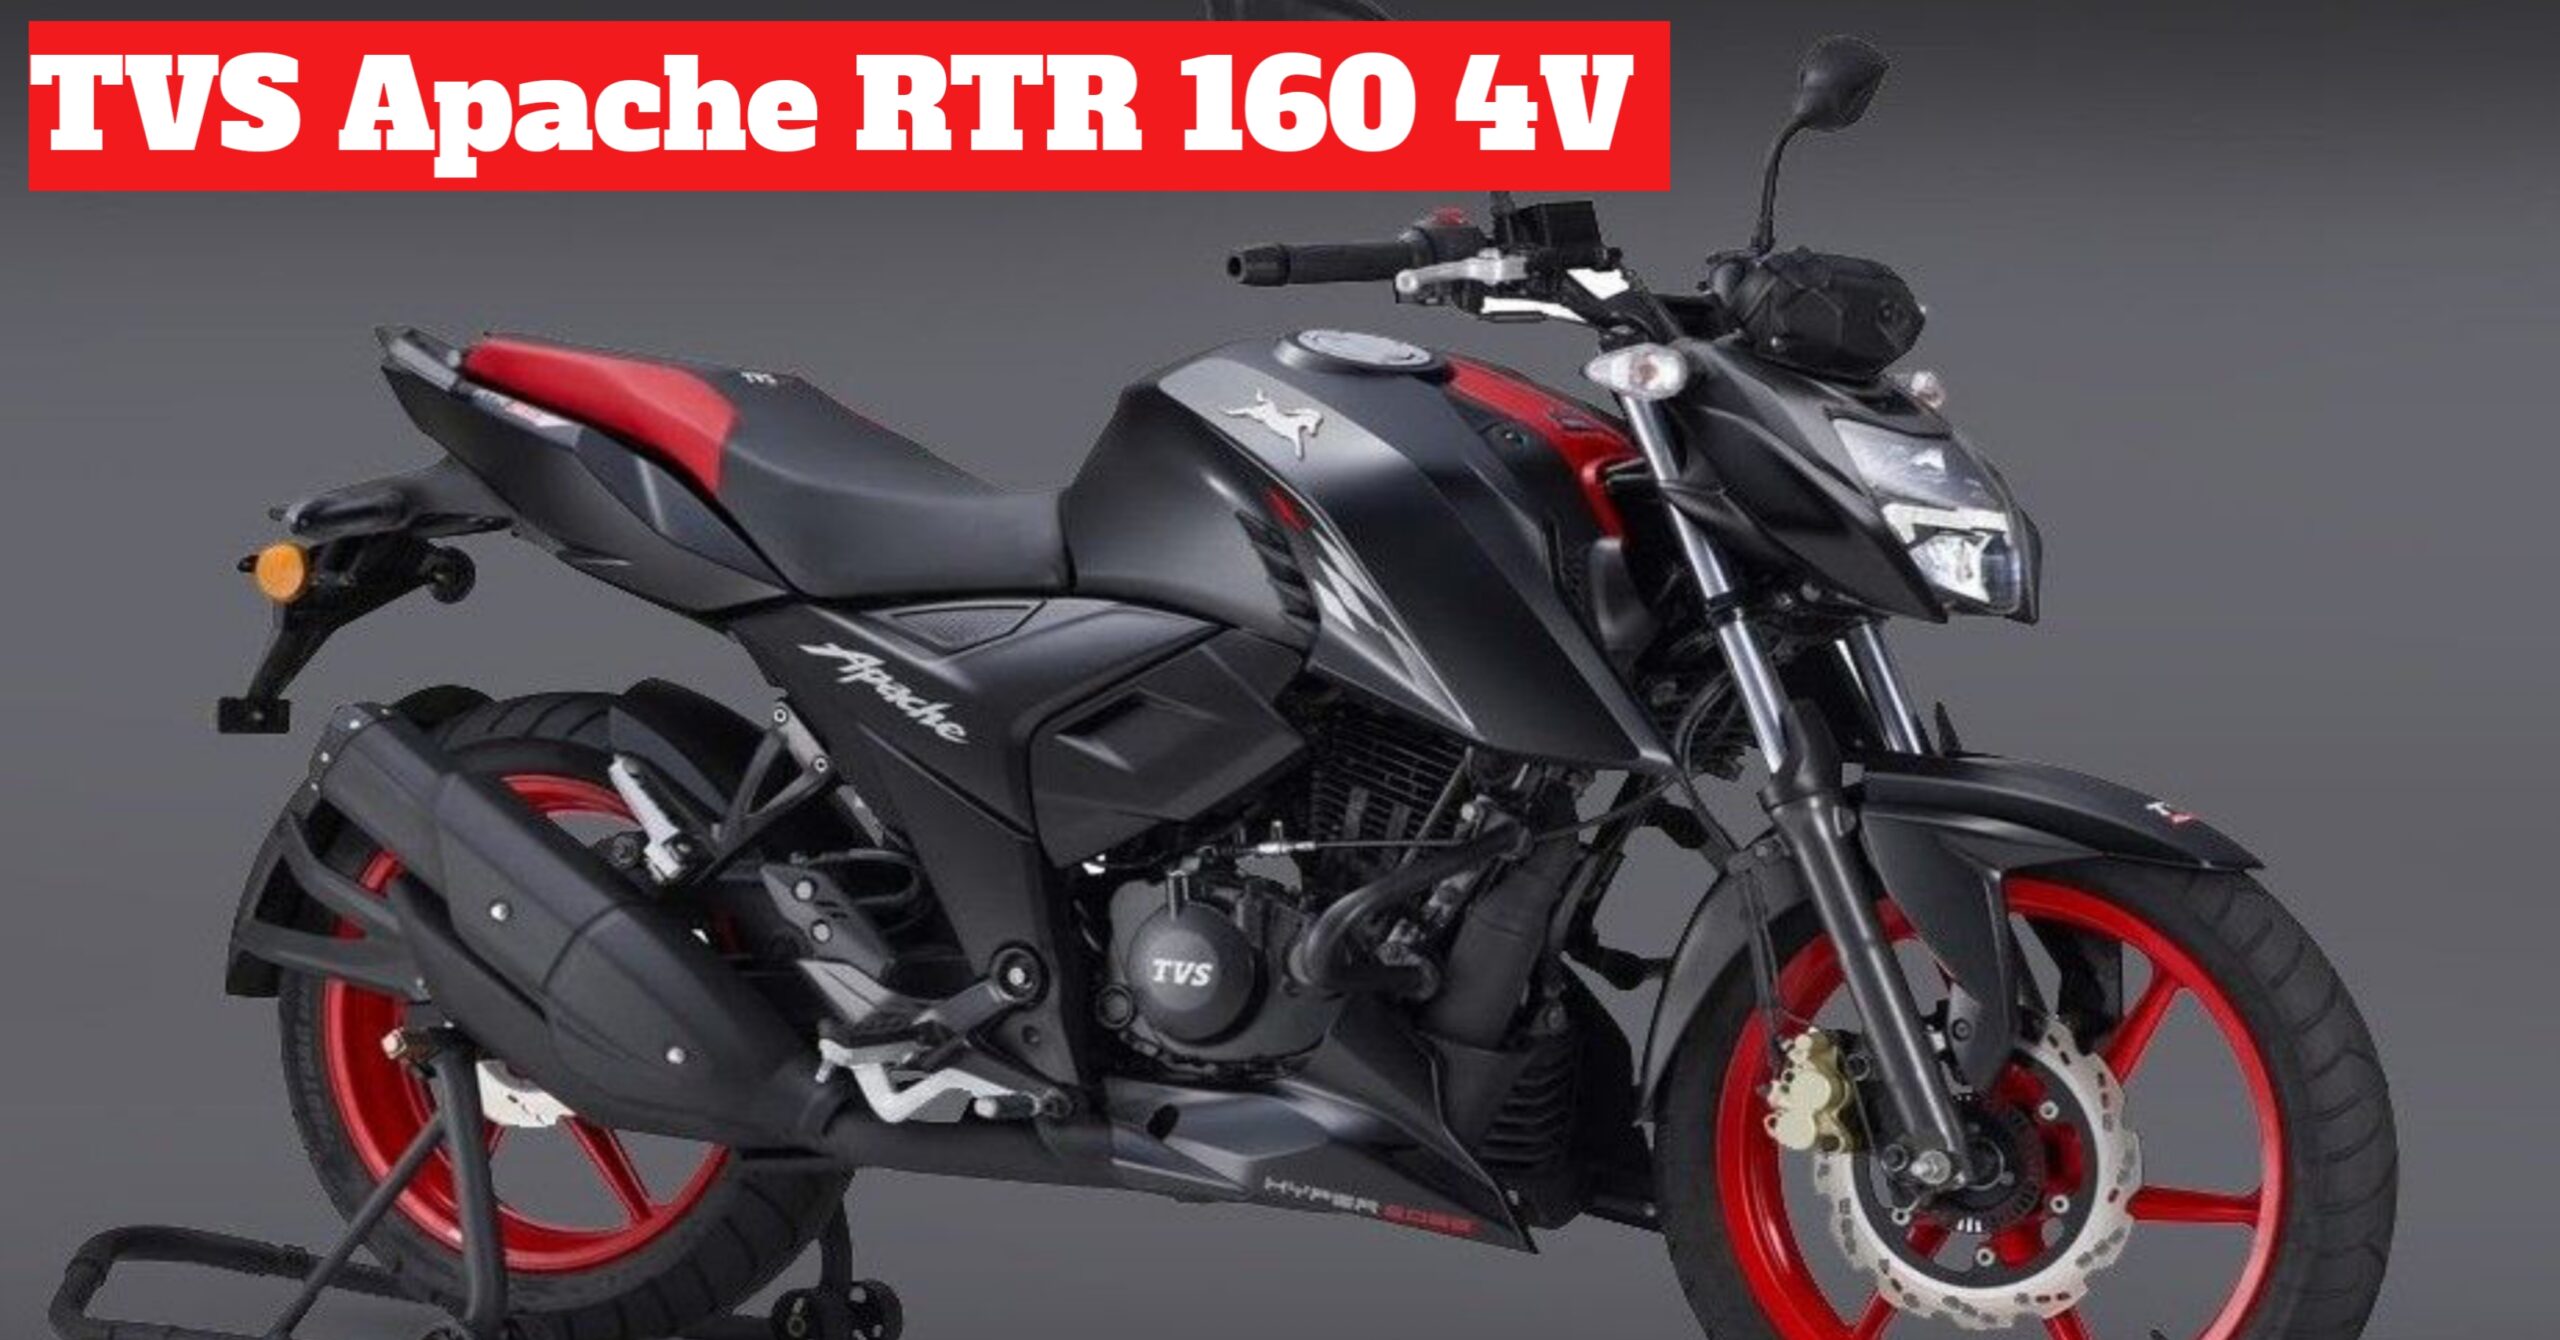 TVS Apache RTR 160 4V Bike